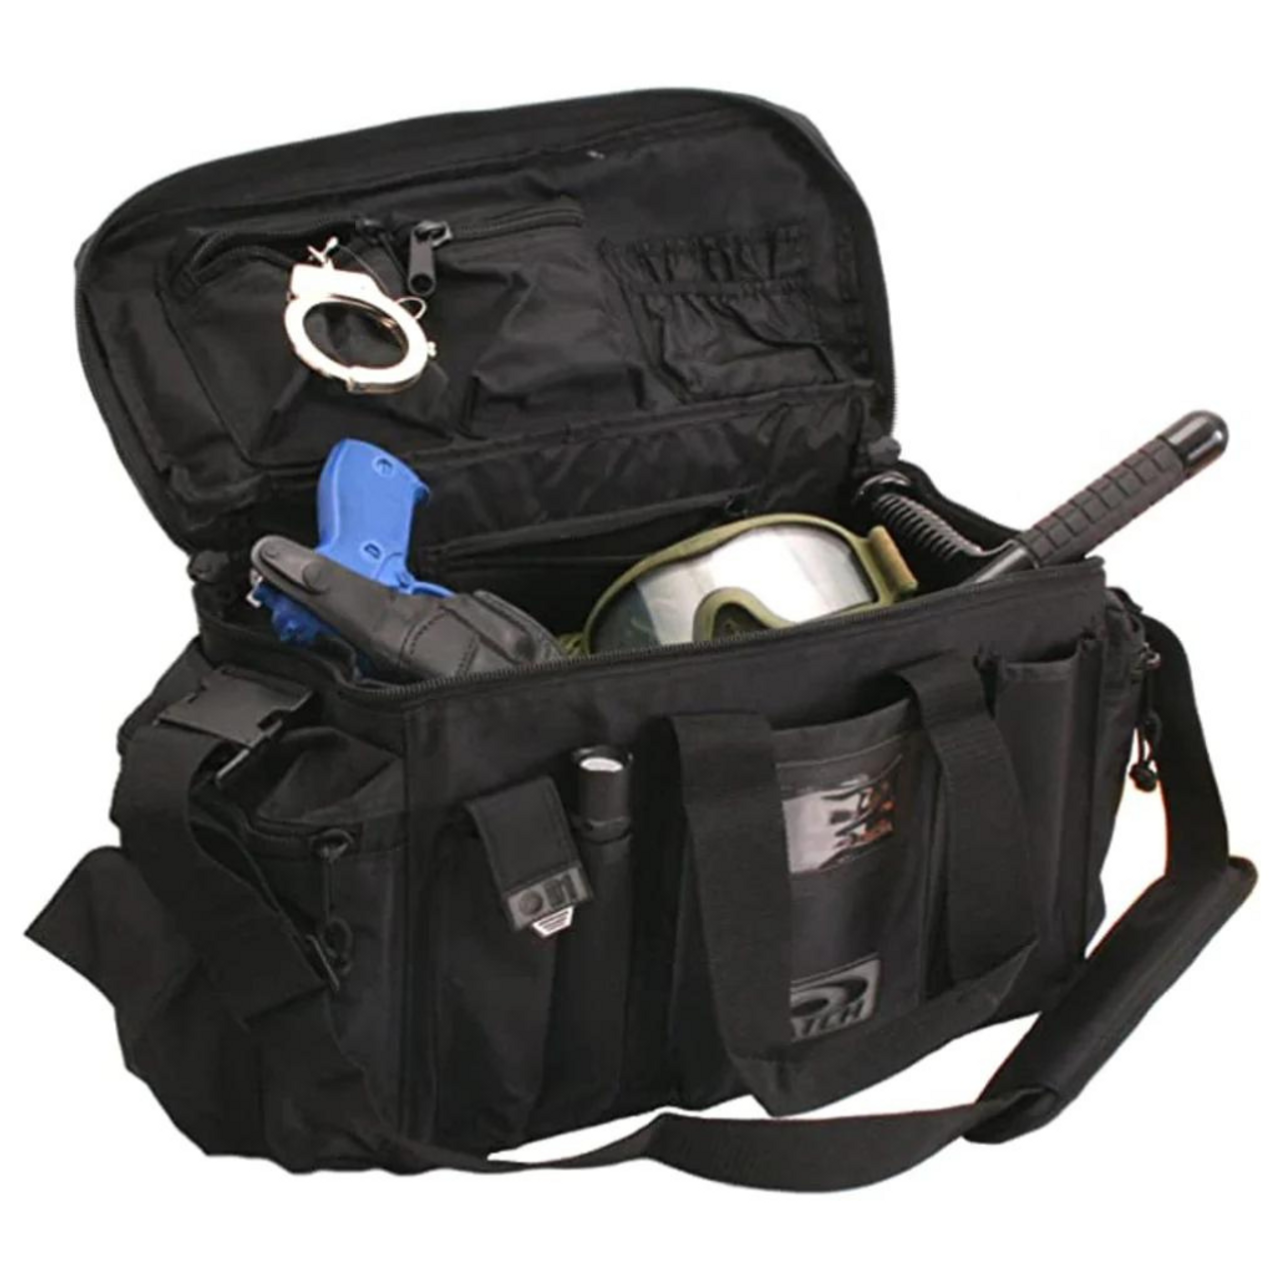 D1 Black Patrol Gear Bag